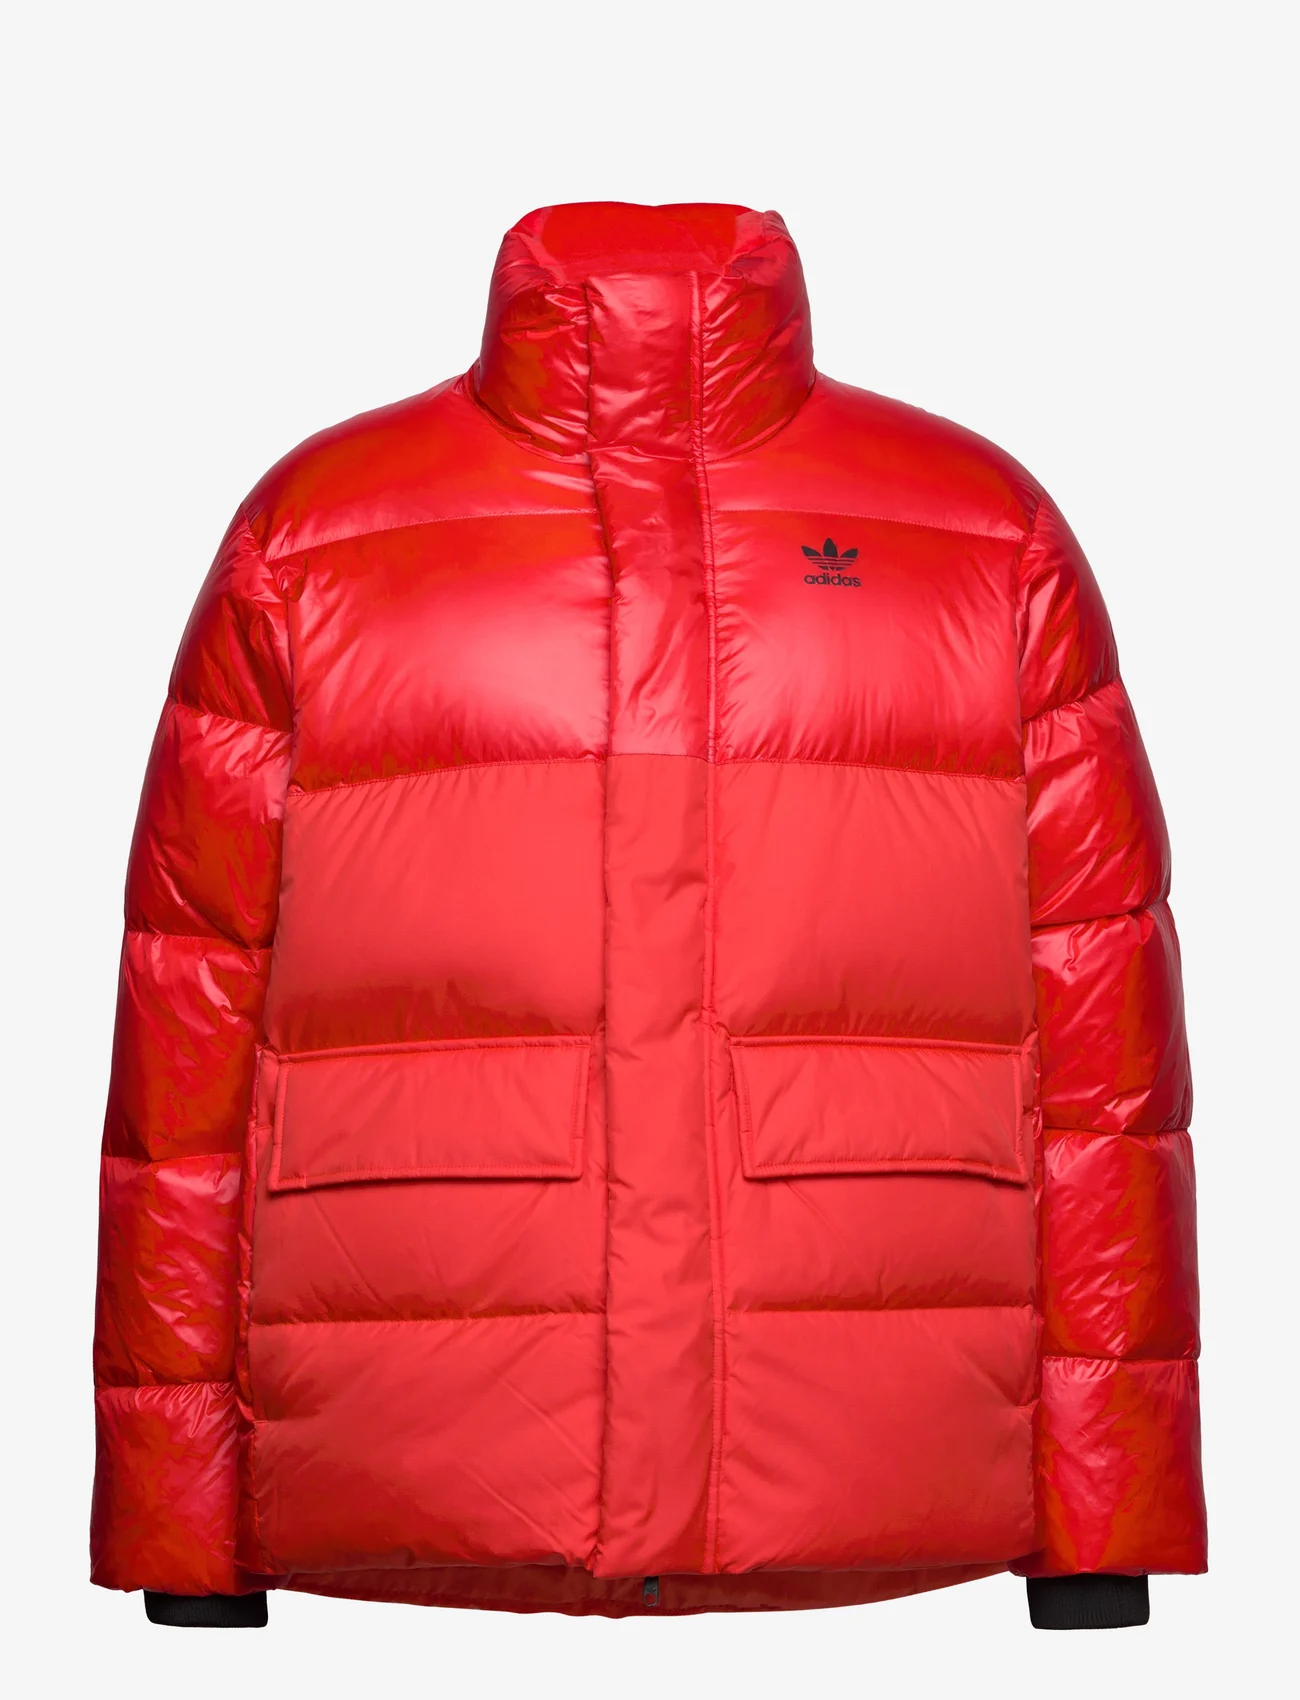 adidas Originals - Midweight Down Puffer Jacket - winter jackets - actred - 0